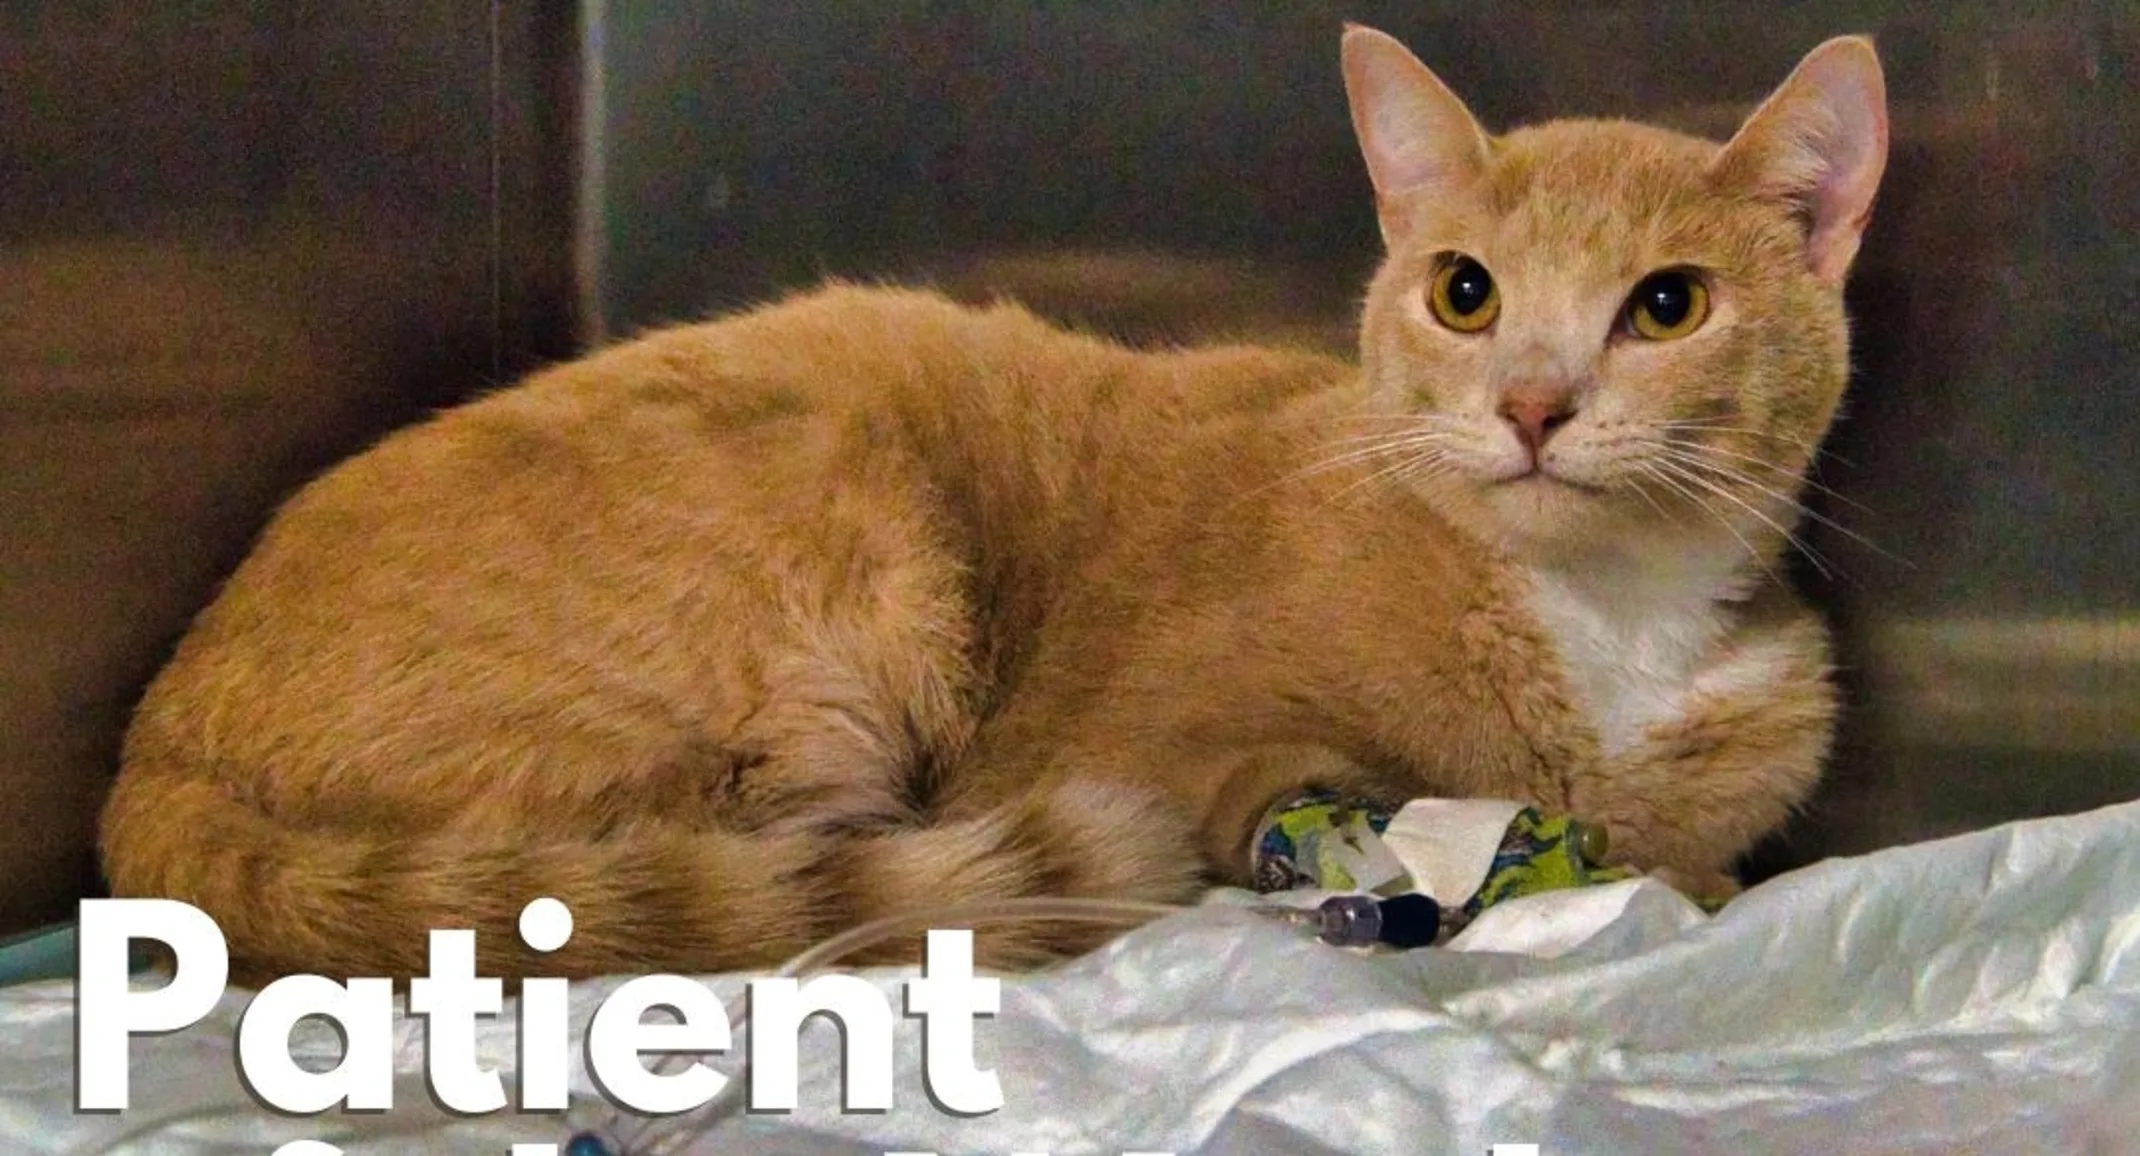 An orange cat named Biscuit